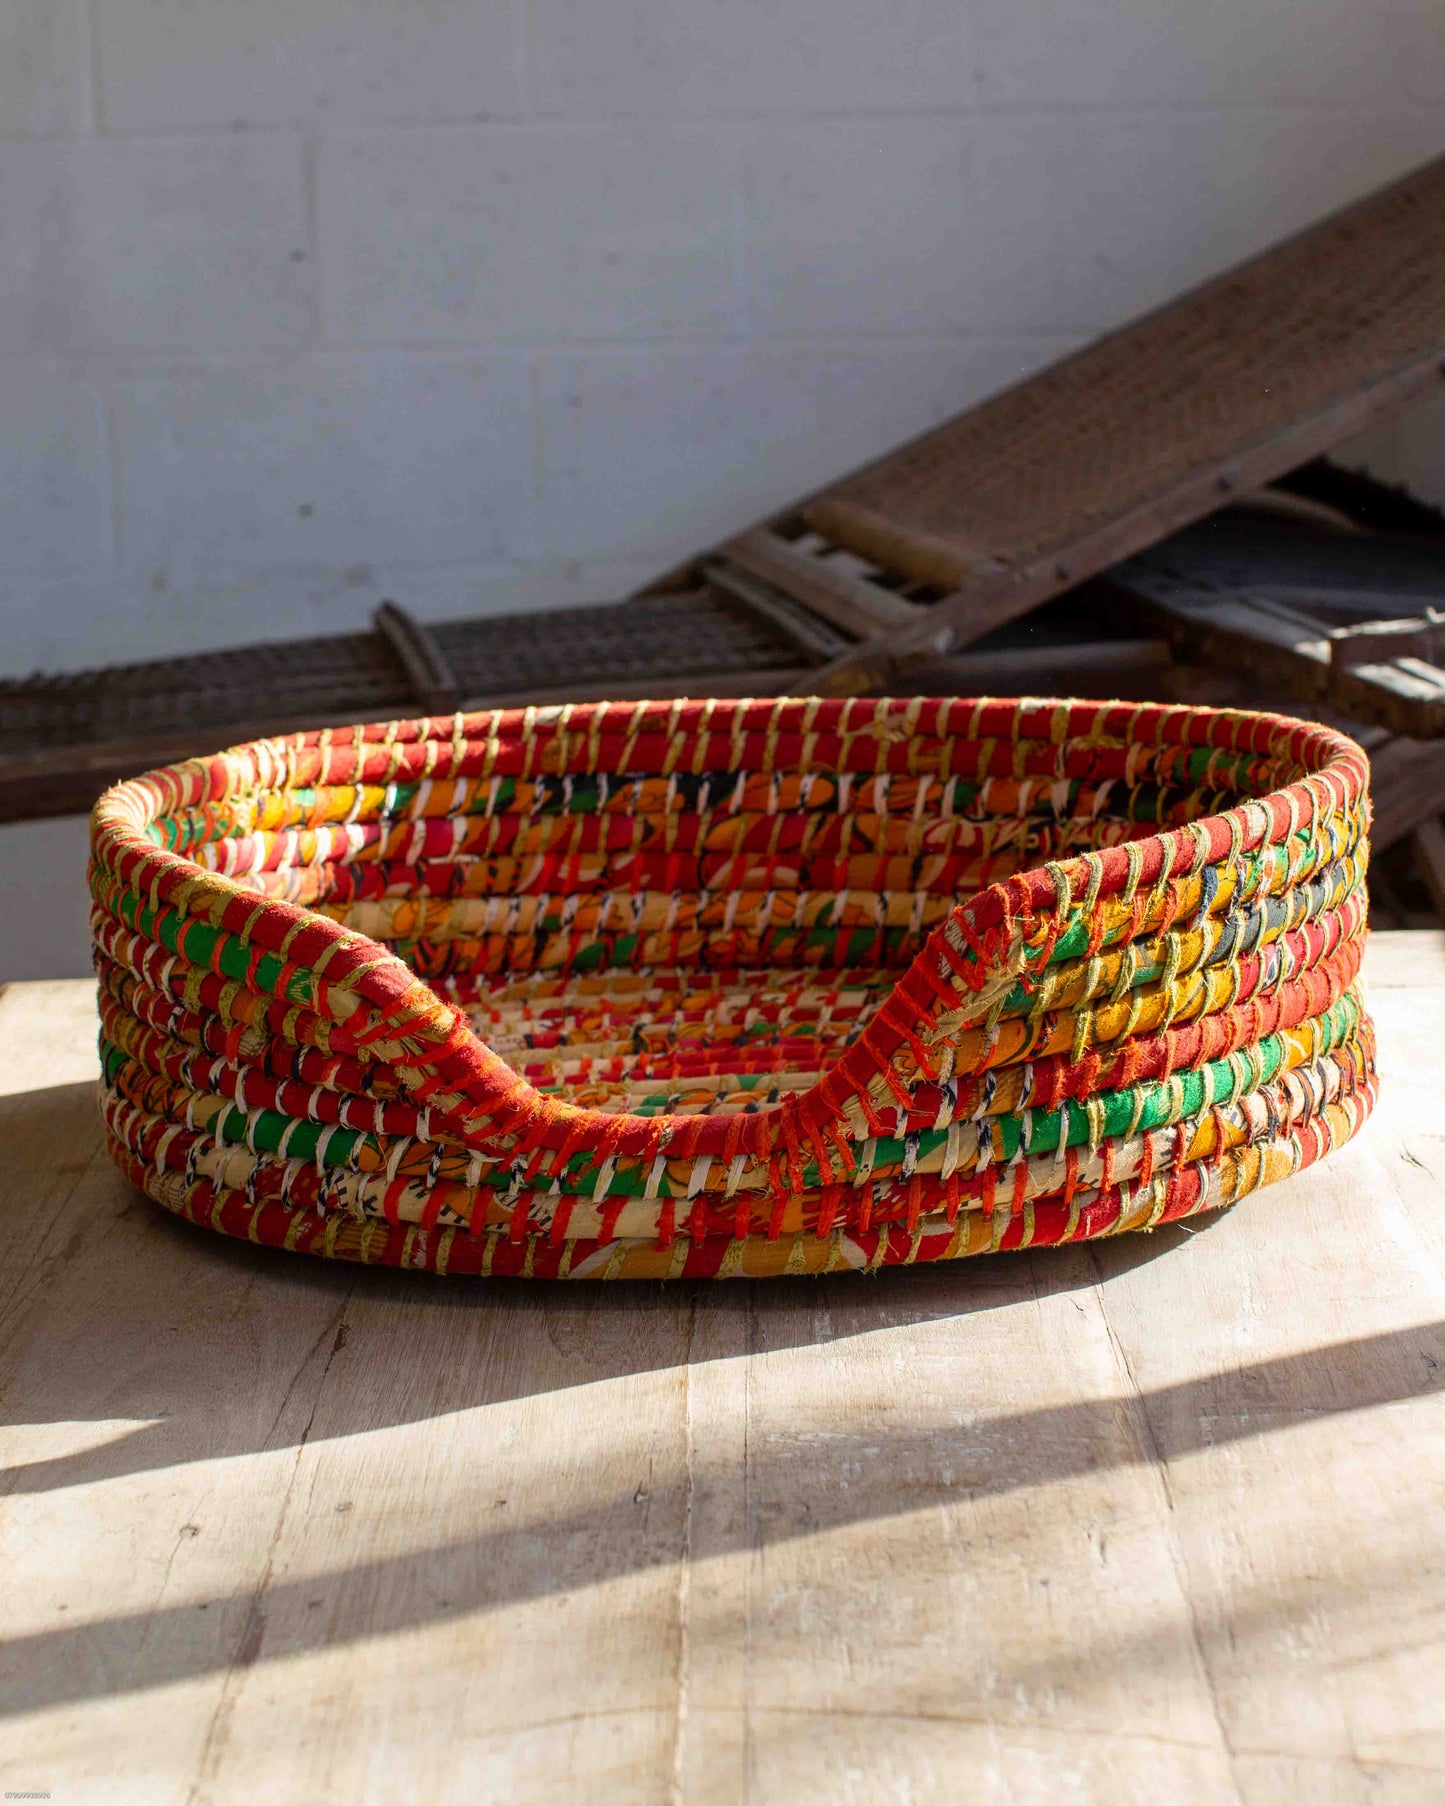 Small Recycled Sari Dog Basket - 2